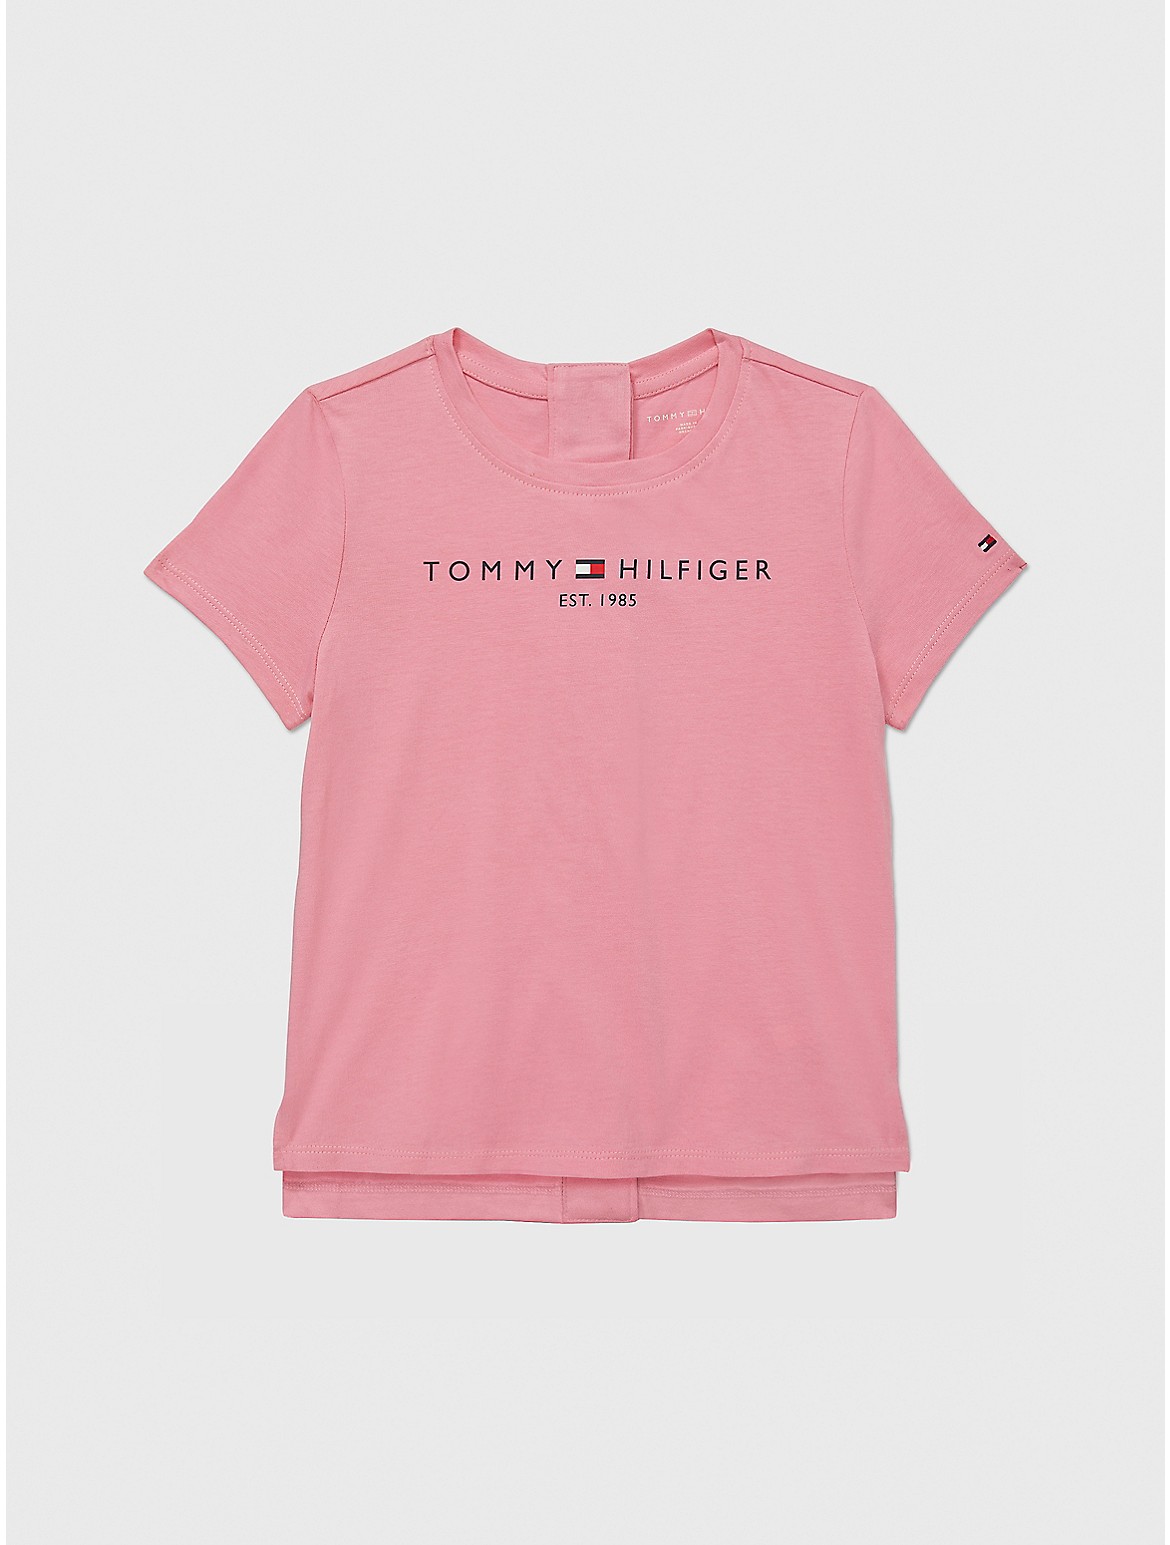 Tommy Hilfiger Girls' Kids' Seated Fit Logo T-Shirt